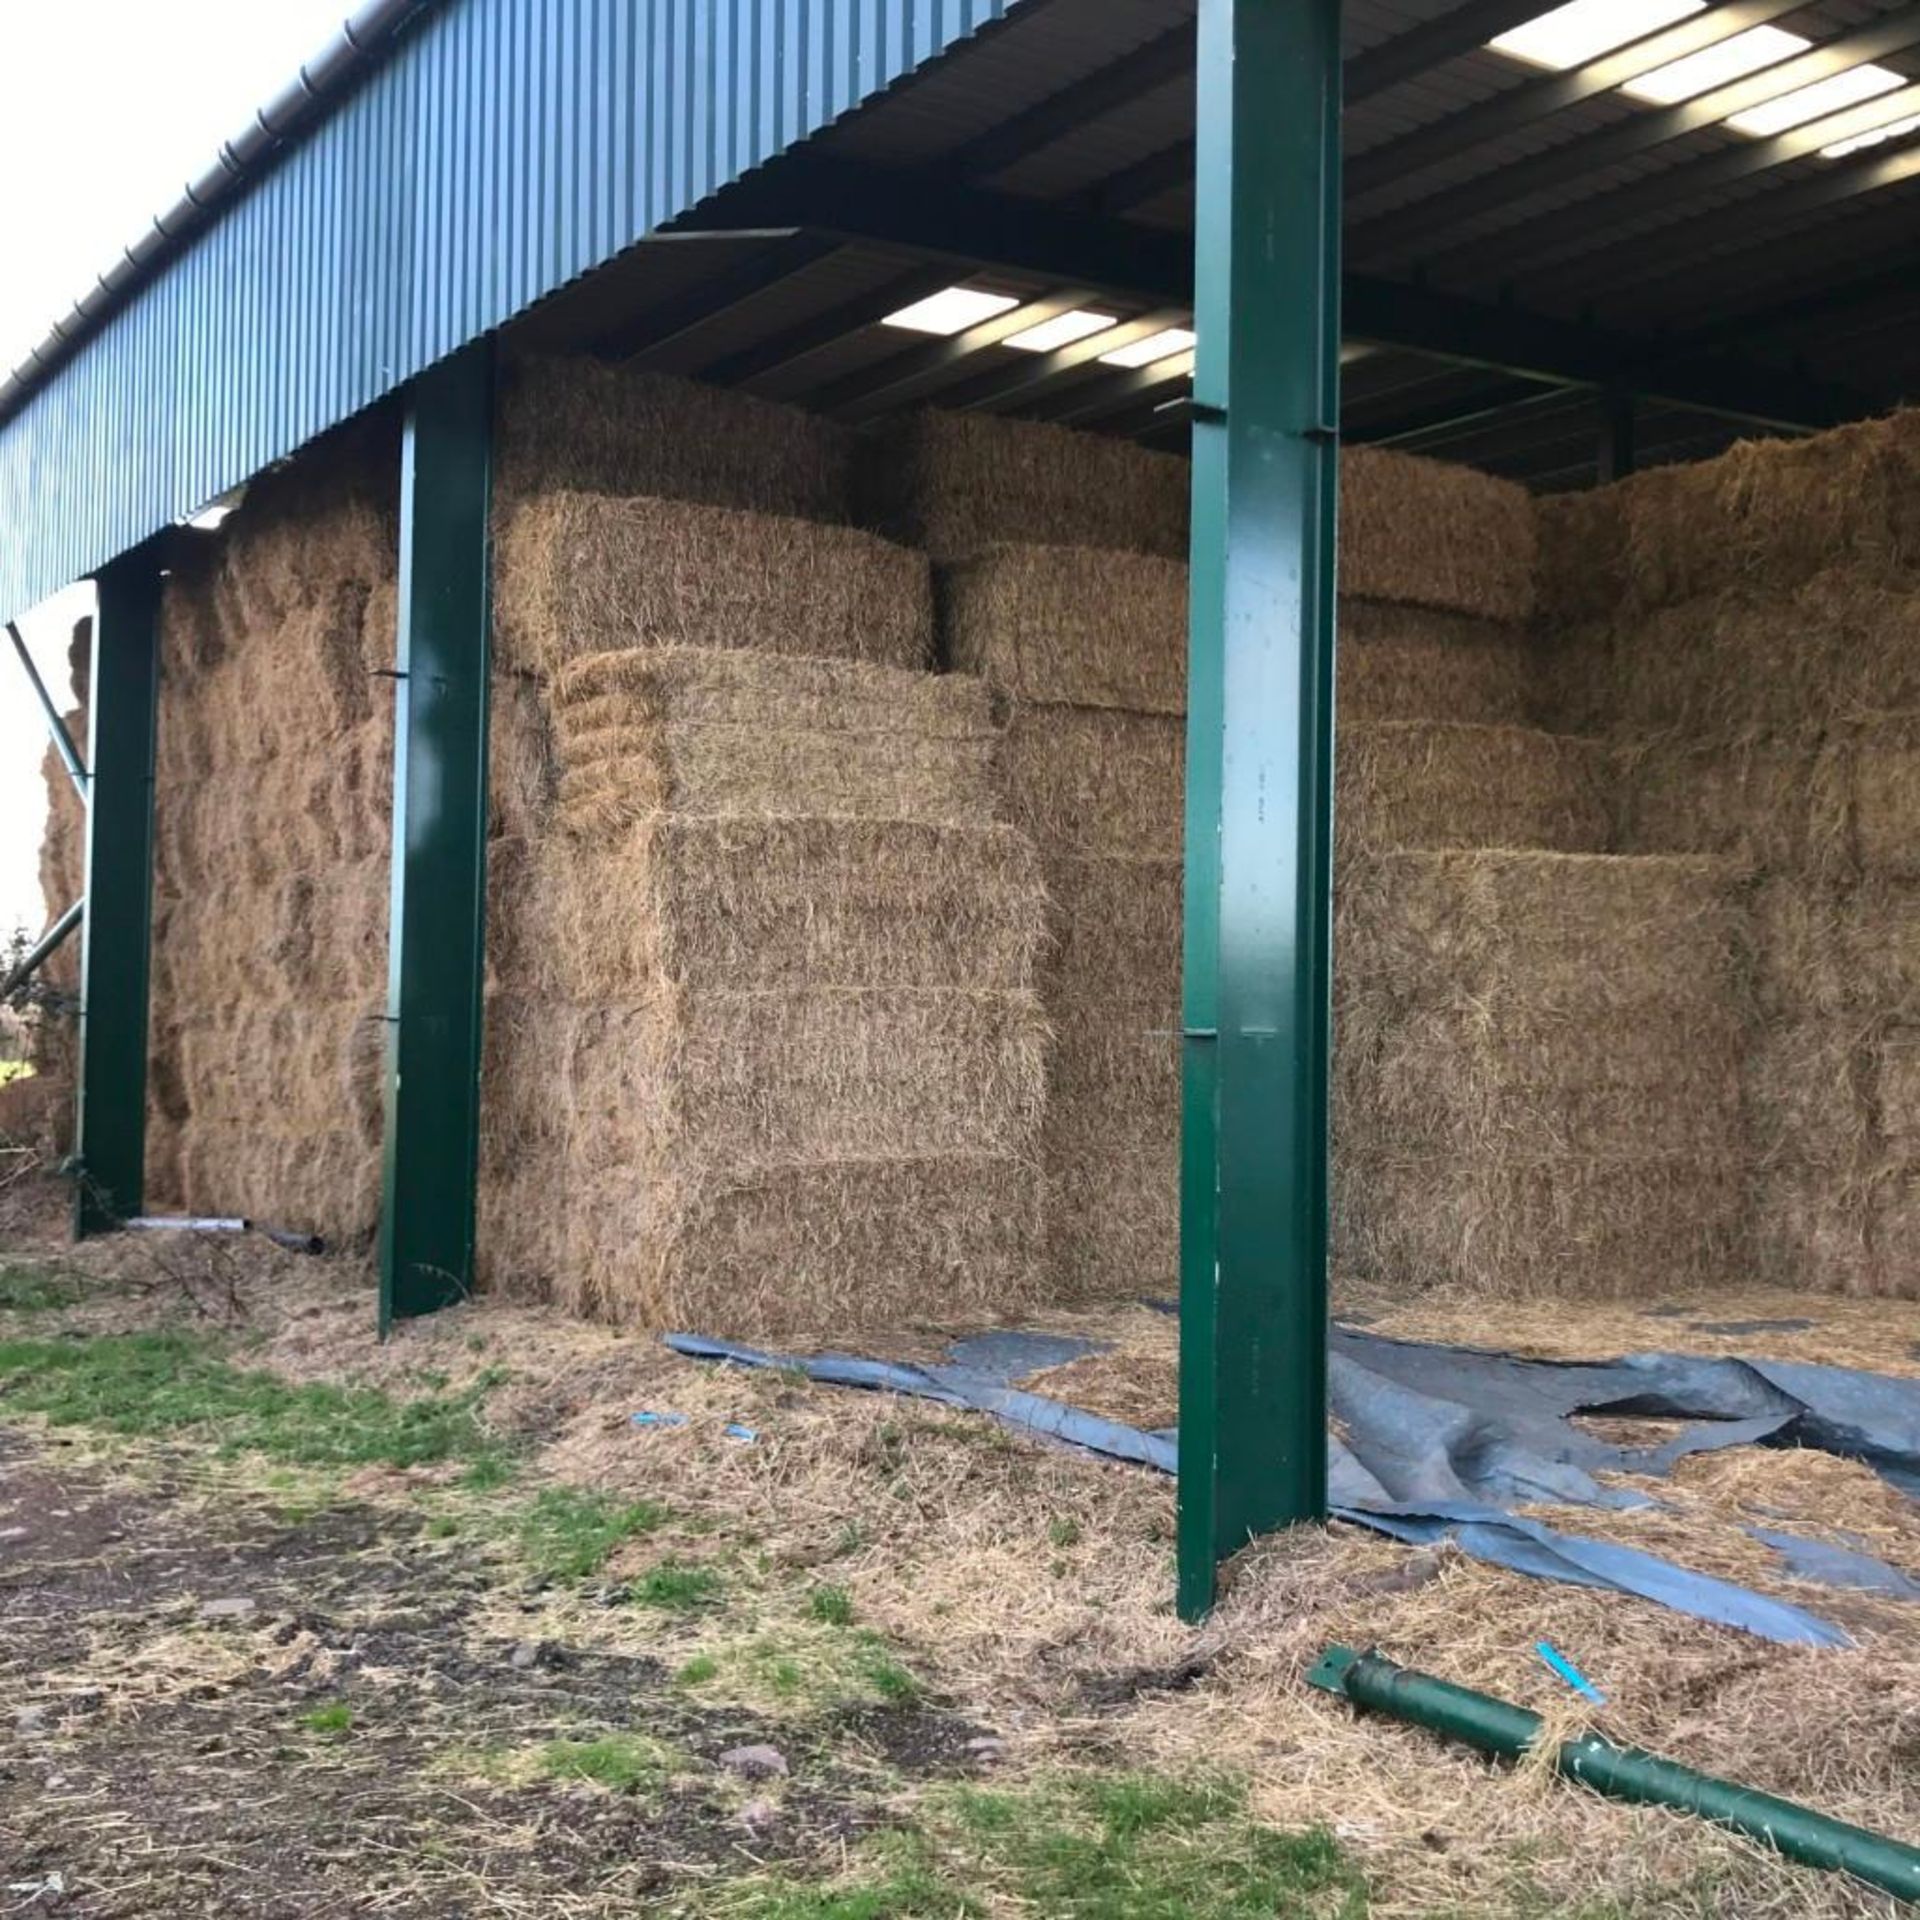 40 Heston Bales of Hay